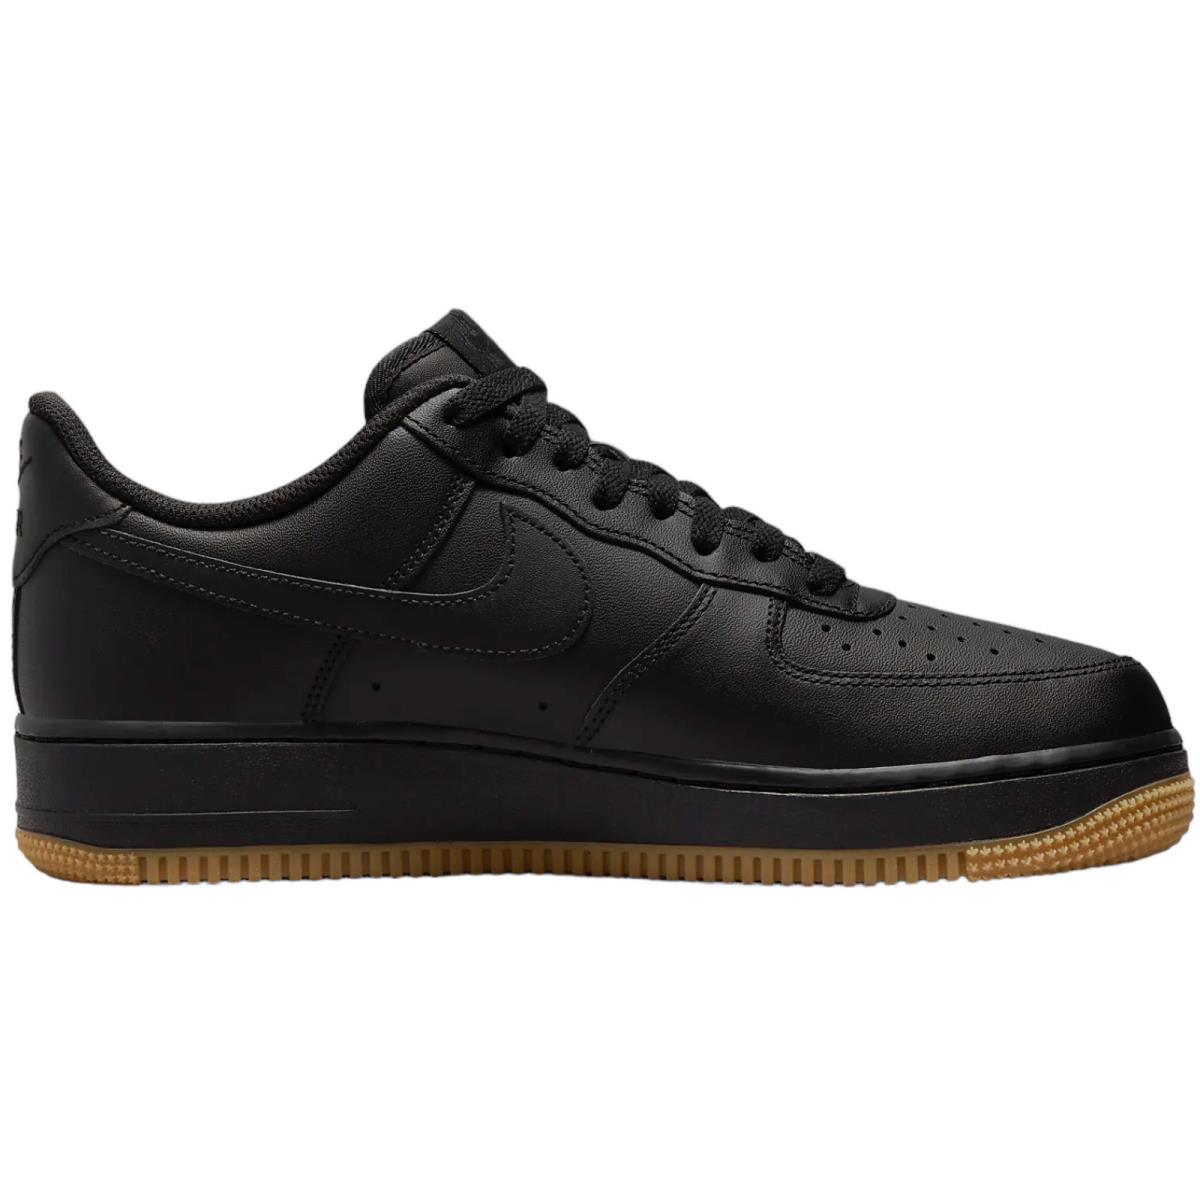 Nike Air Force 1 `07 Men`s Casual Shoes All Colors US Sizes 7-14 Black/Gum Light Brown/Black